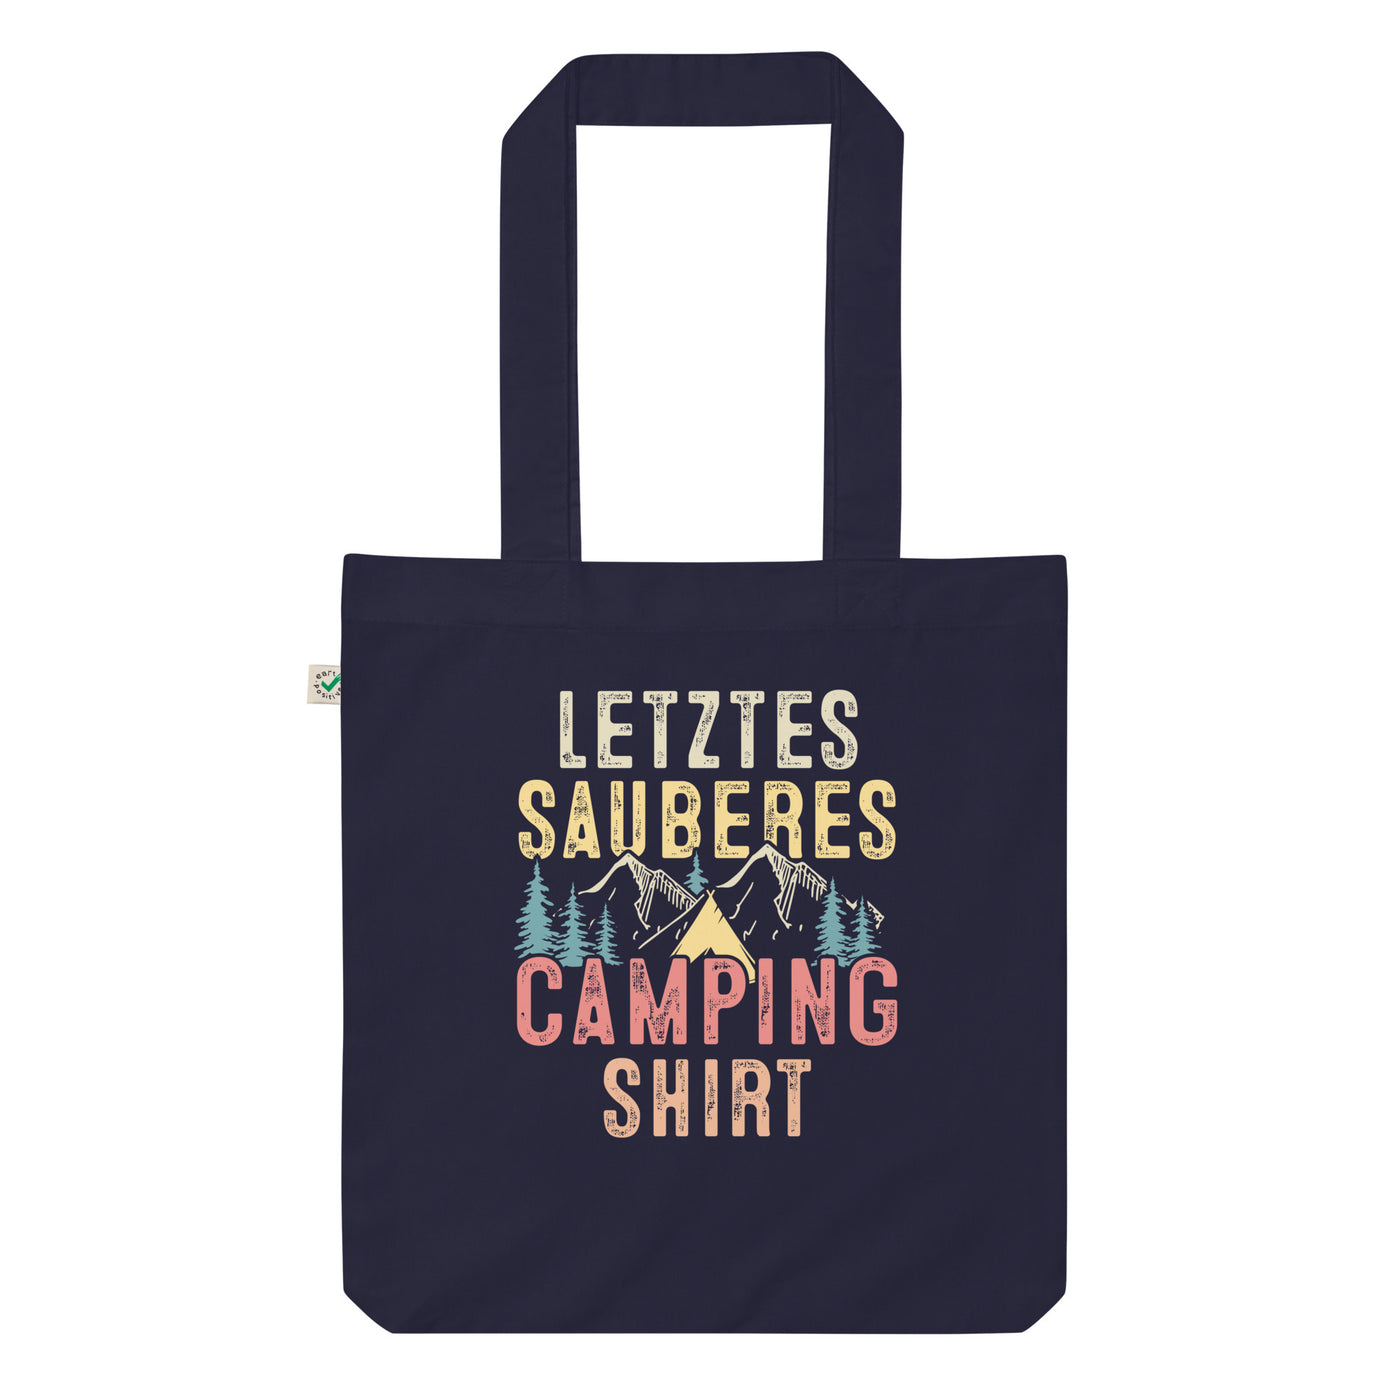 Letztes Sauberes Camping Shirt - Organic Einkaufstasche camping Navy